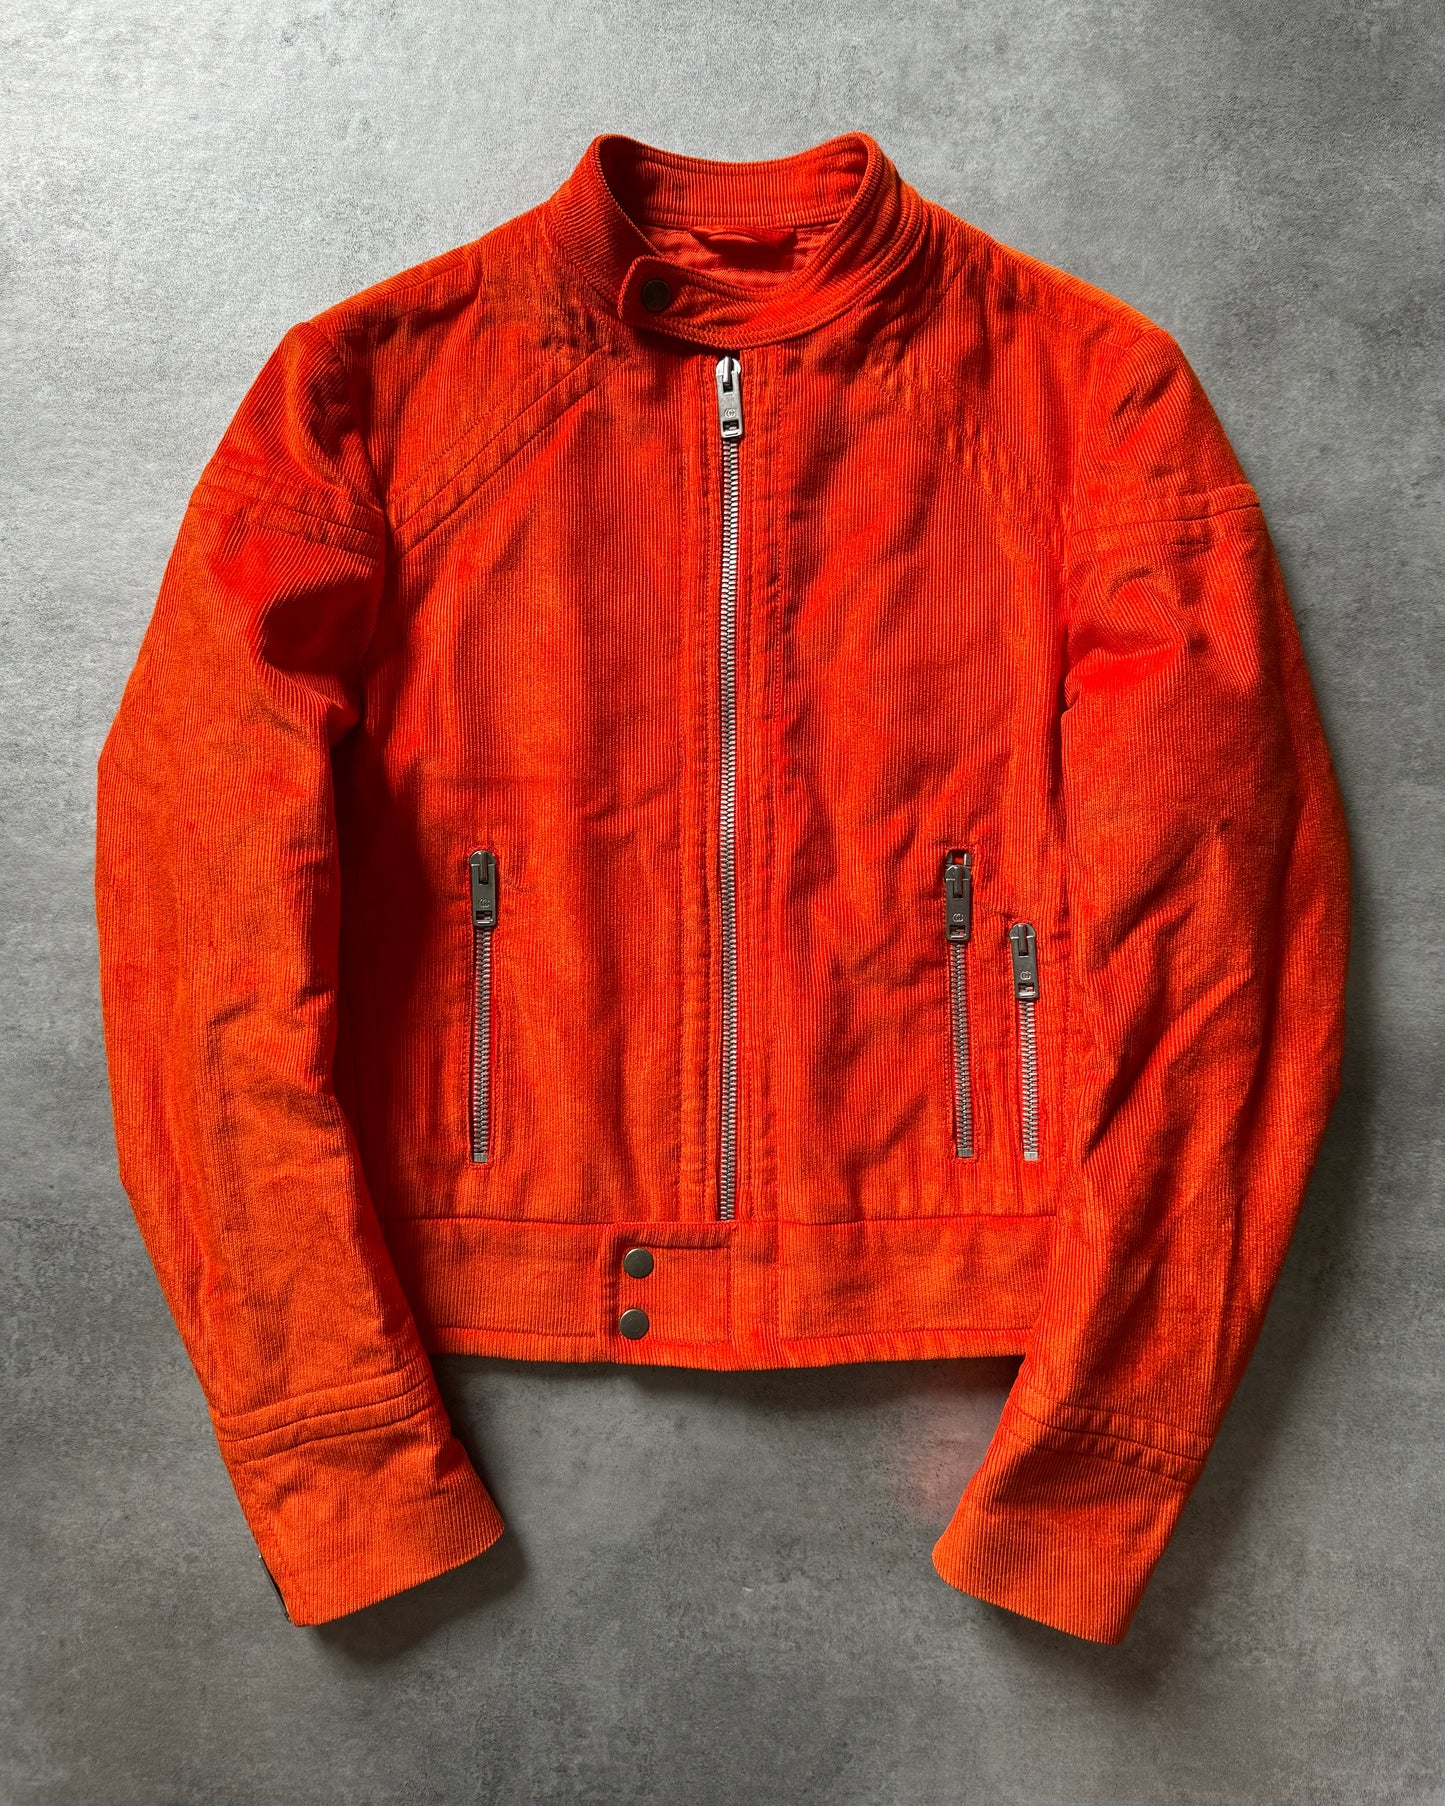 FW1999 Gucci Orange Biker Jacket by Tom Ford (S) - 1